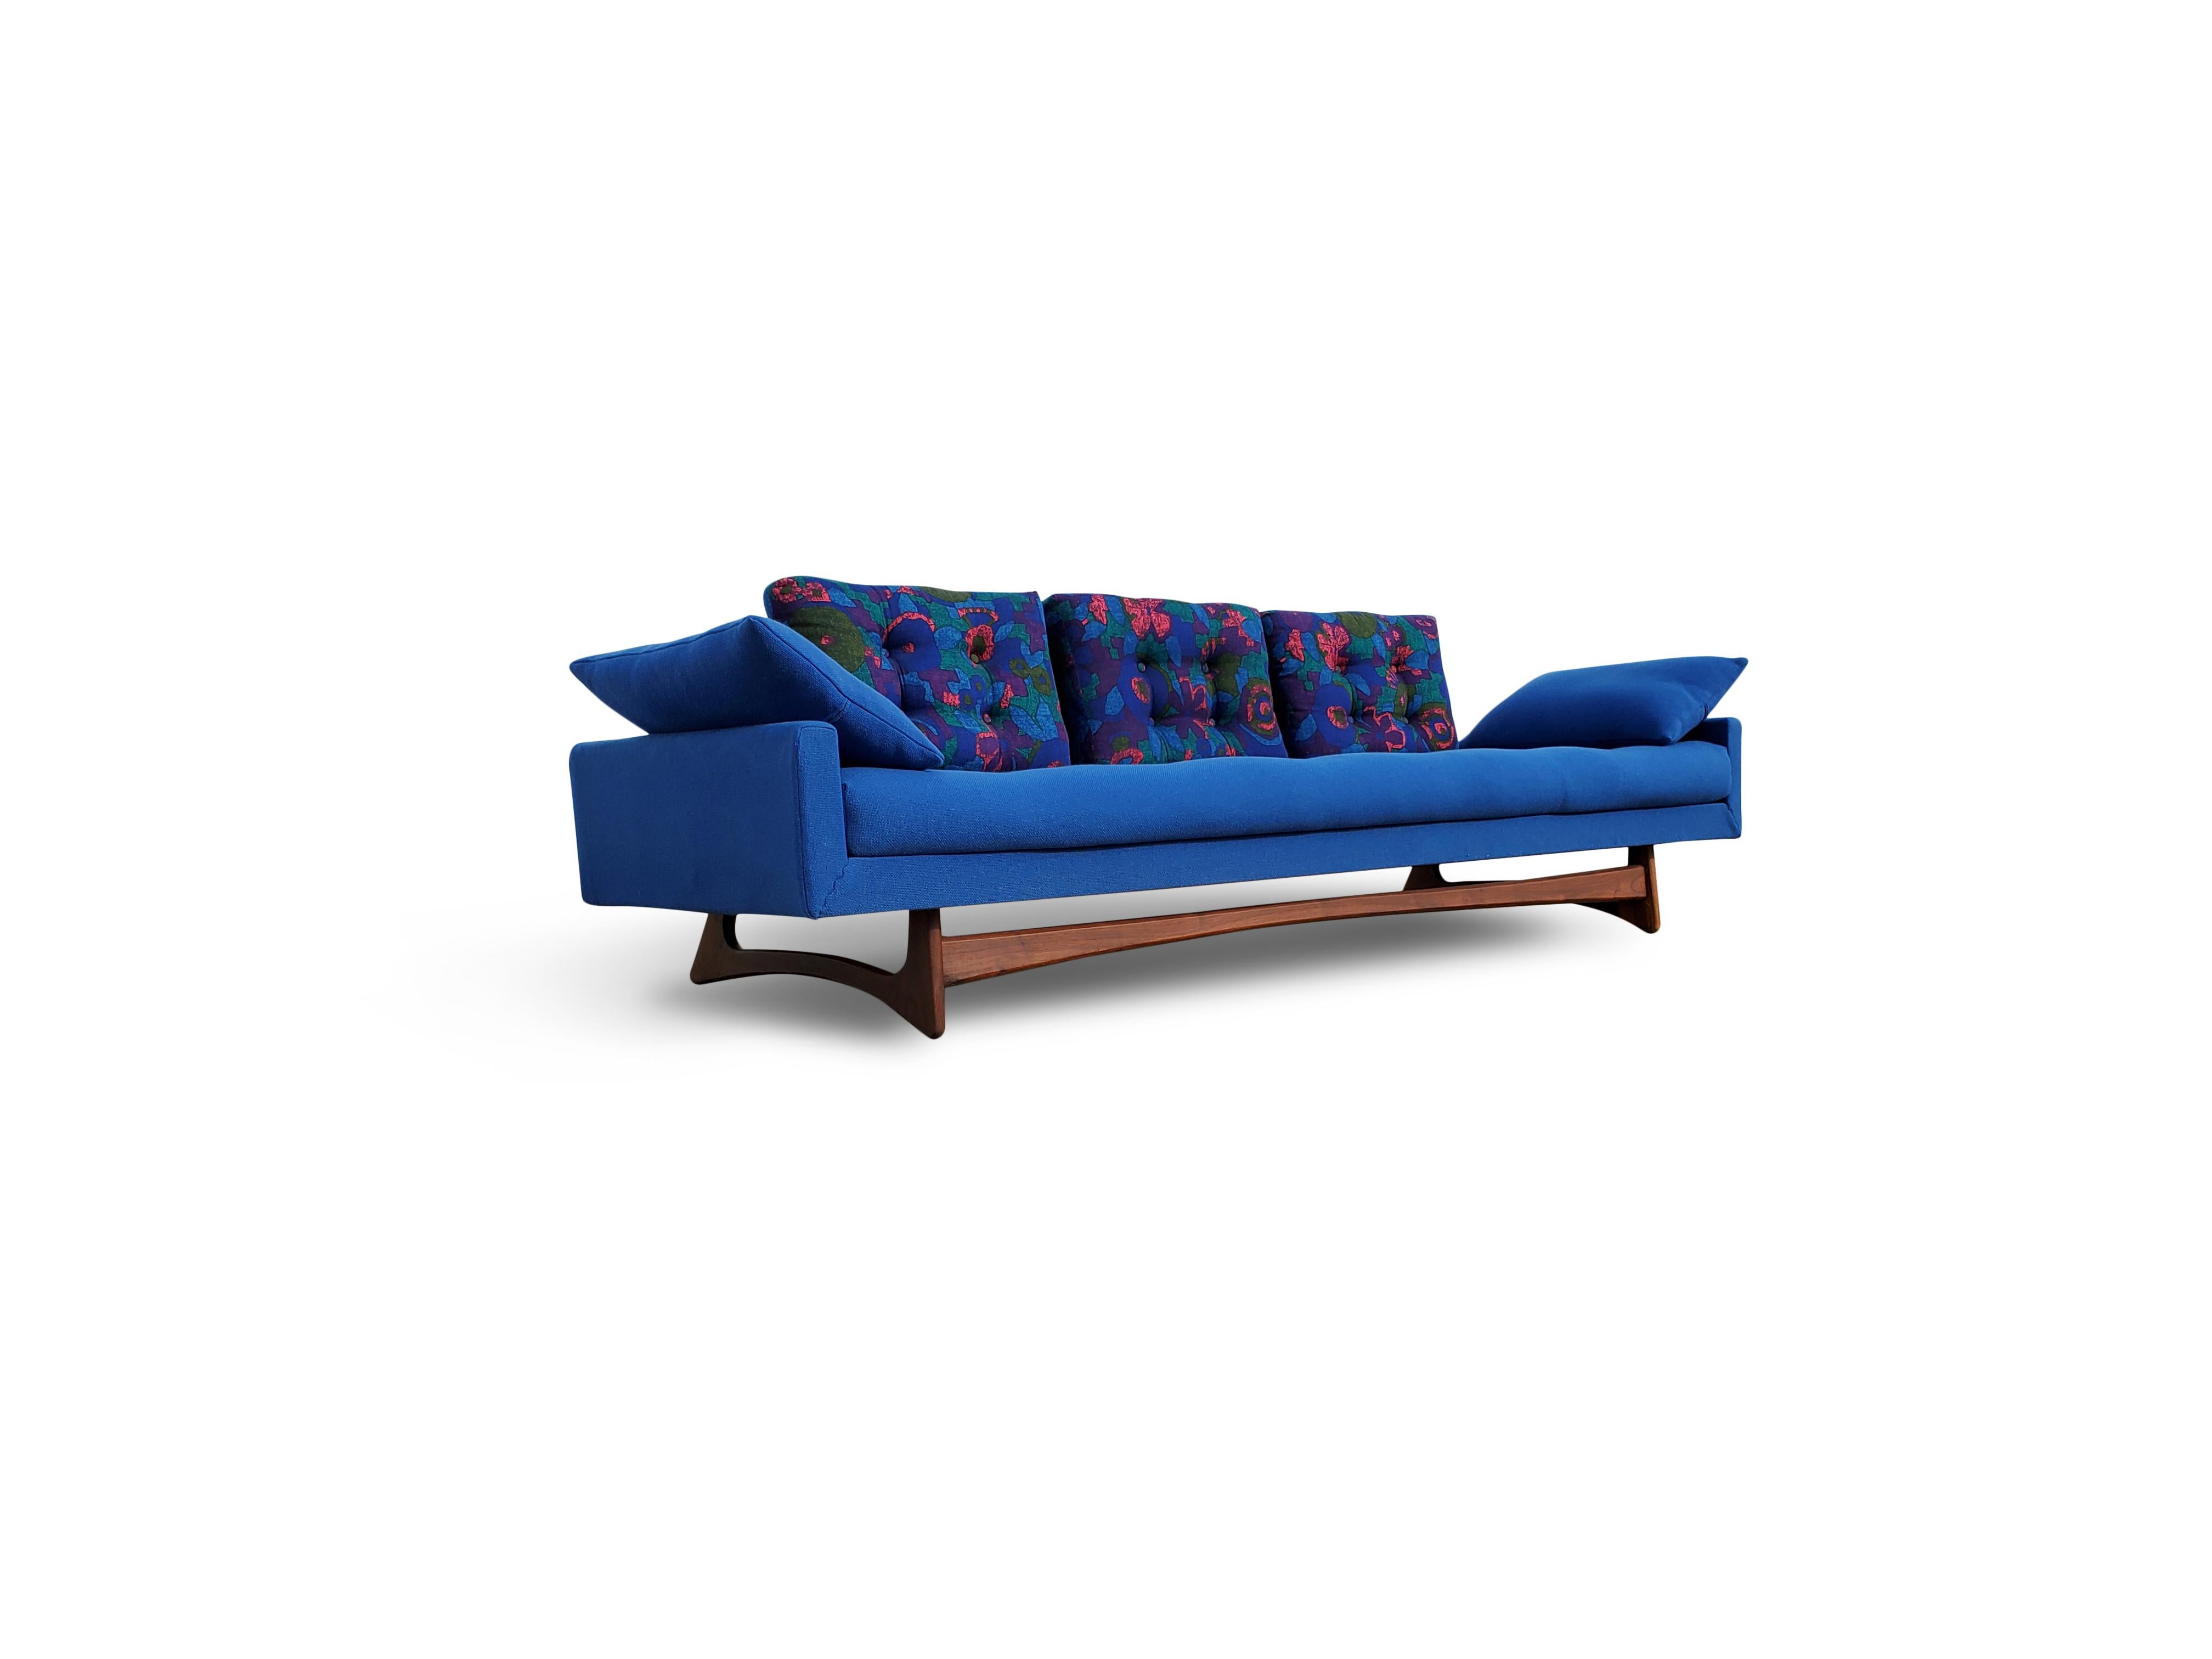 Adrian Pearsall for Craft Associates Gondola sofa.